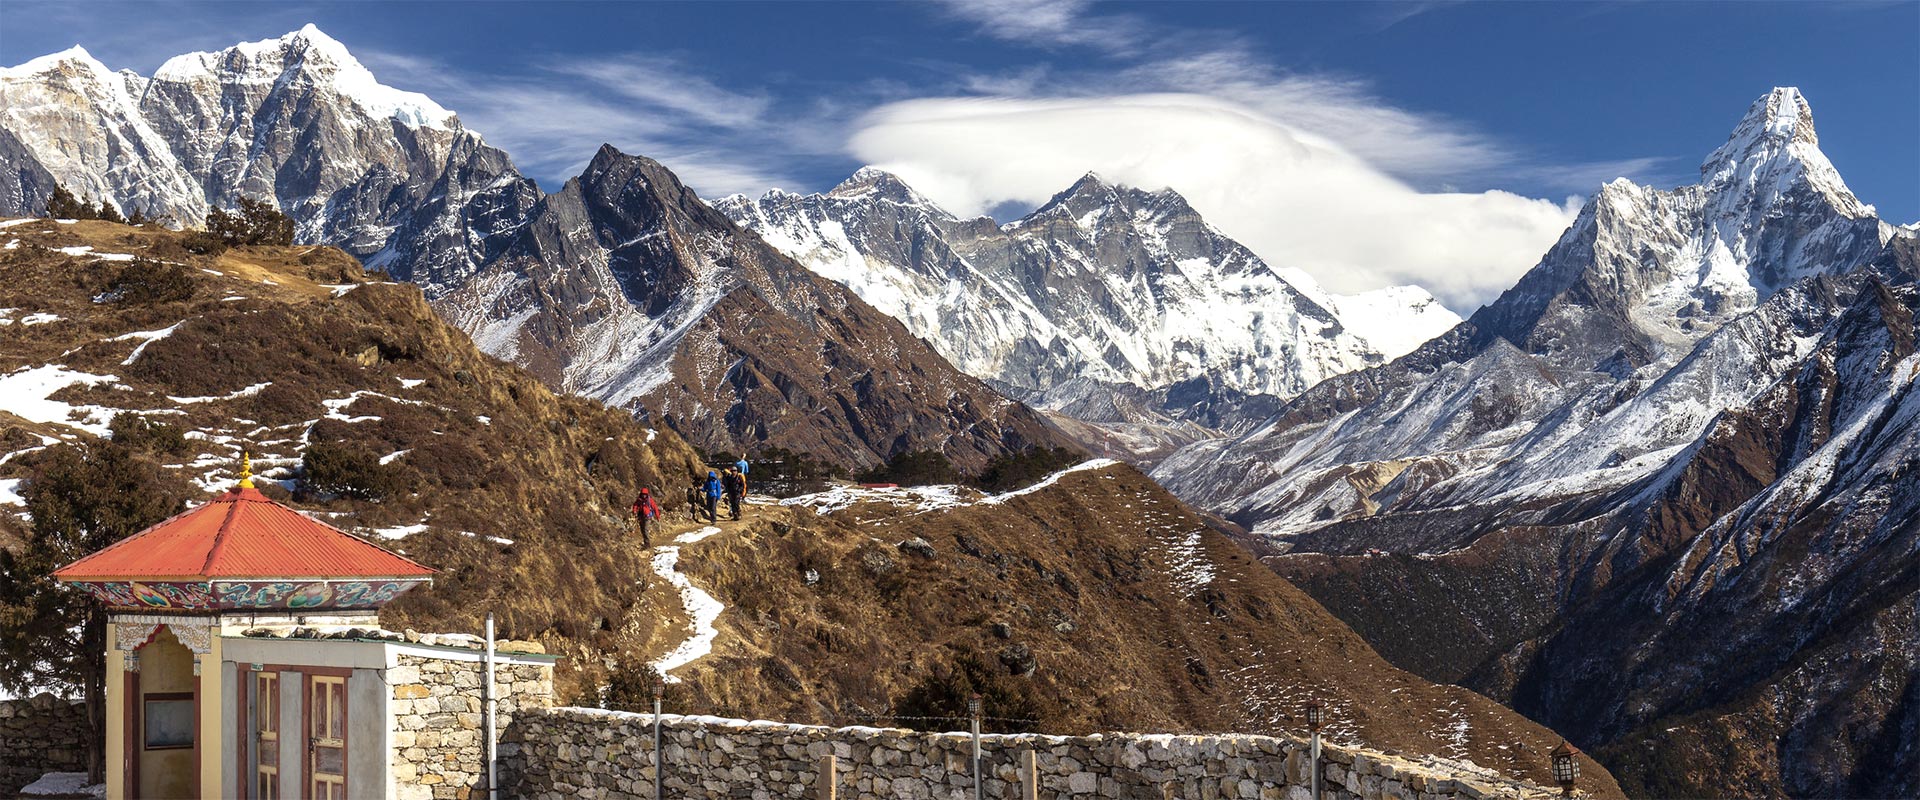 Mount Everest Base Camp Trekking – An Expedition in Khumbu Region